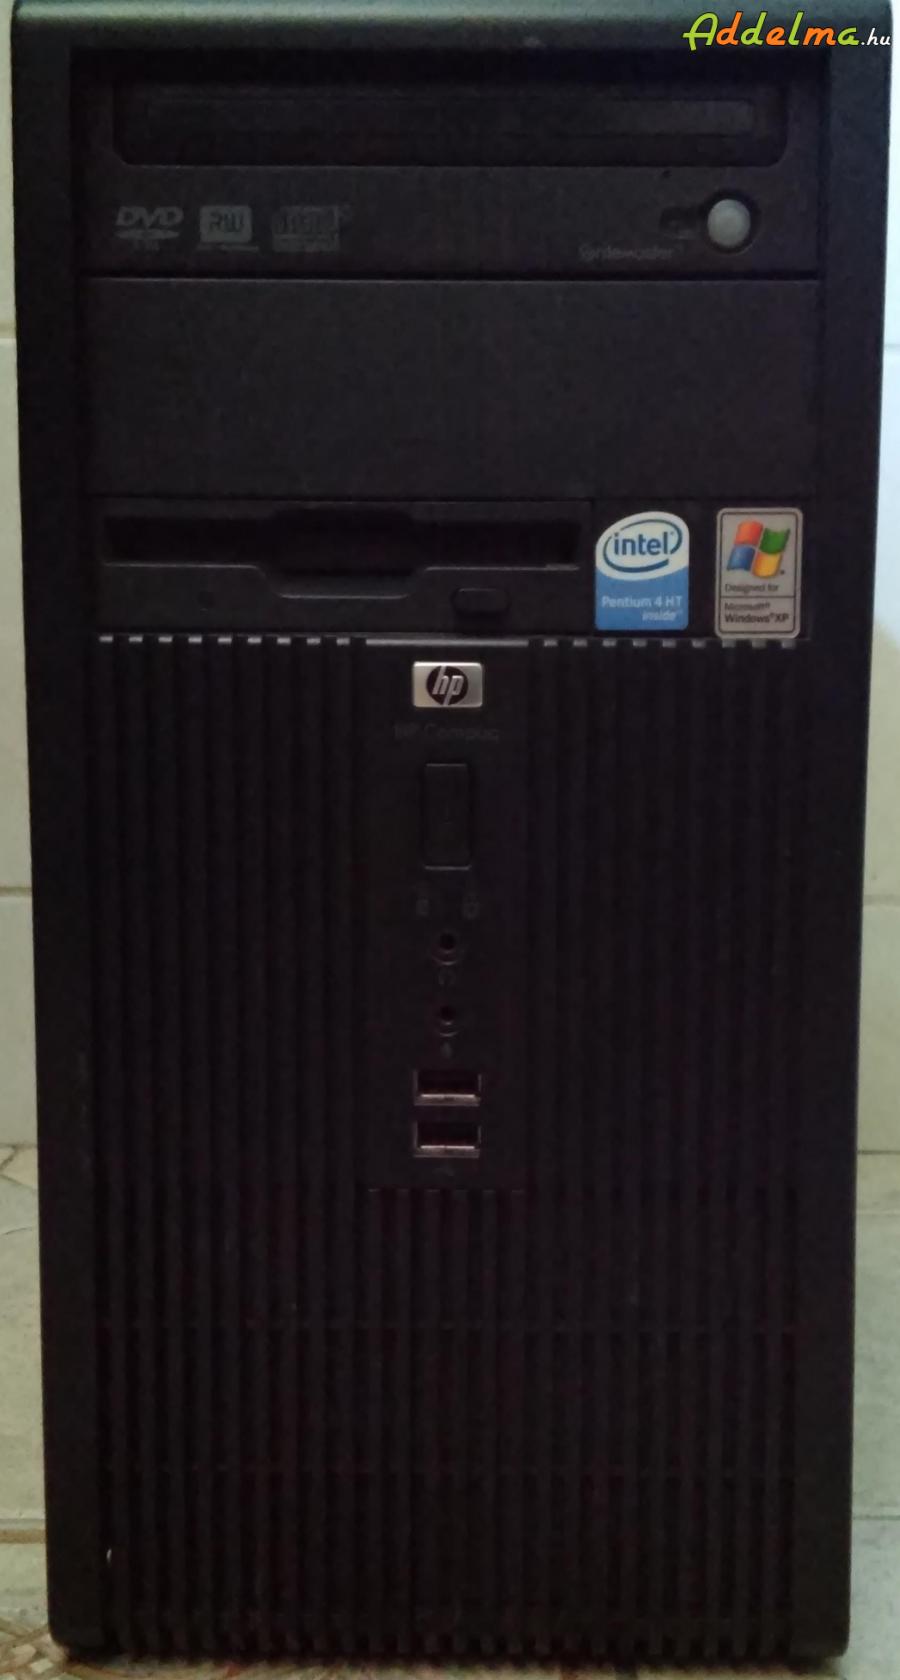 HP Compaq DX 2200 microtower